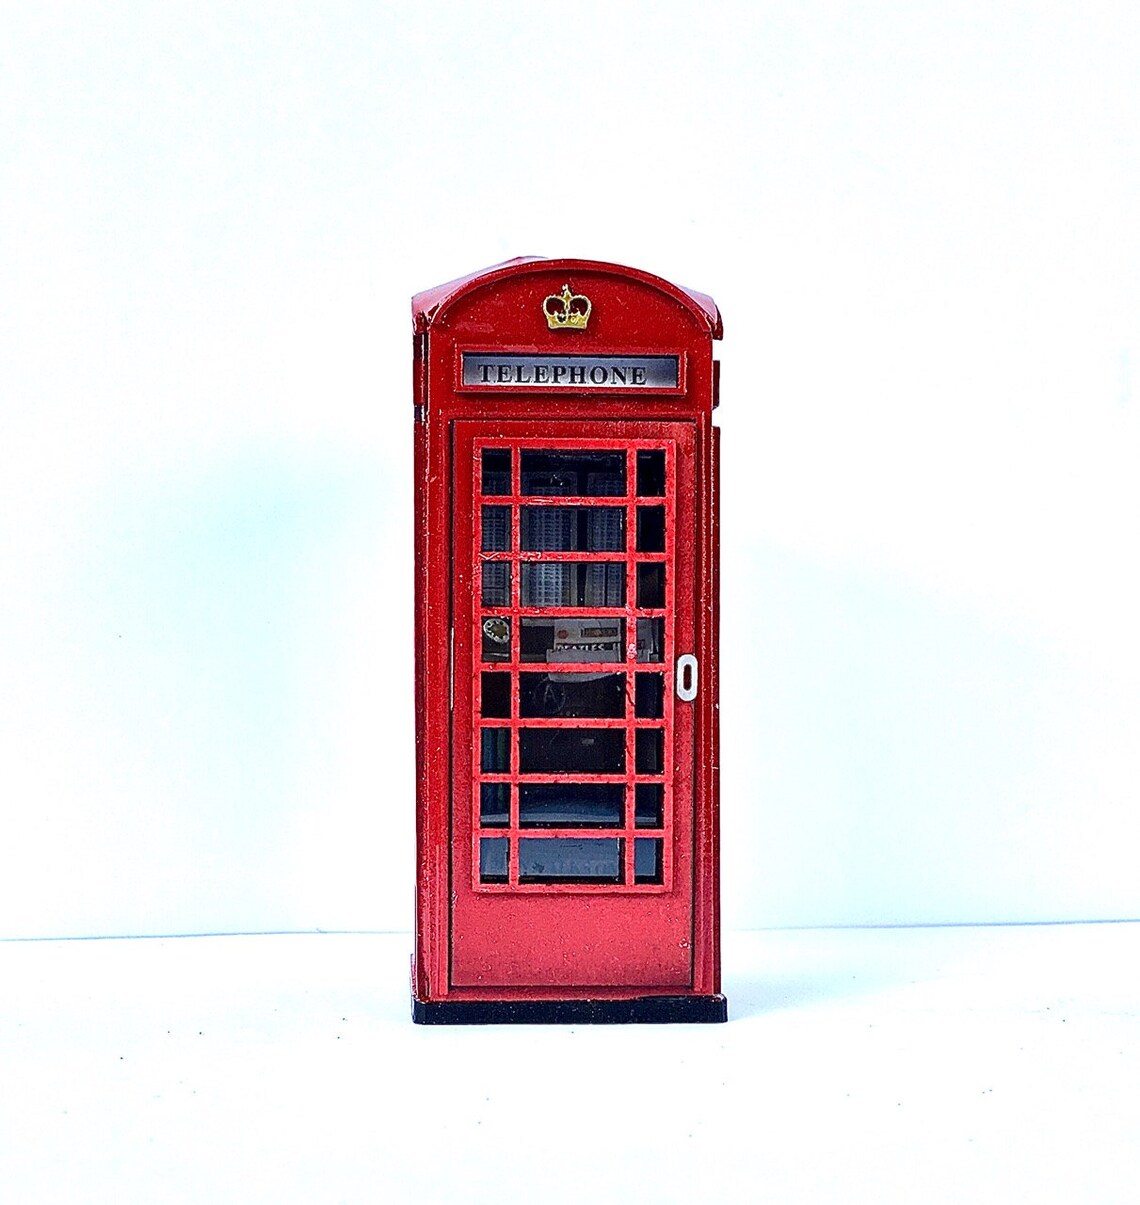 LONDON K6 TELEPHONE BOX ooak one of a kind telephone booth unique model home decor dollhouse miniature artwork gift famous london landmarks